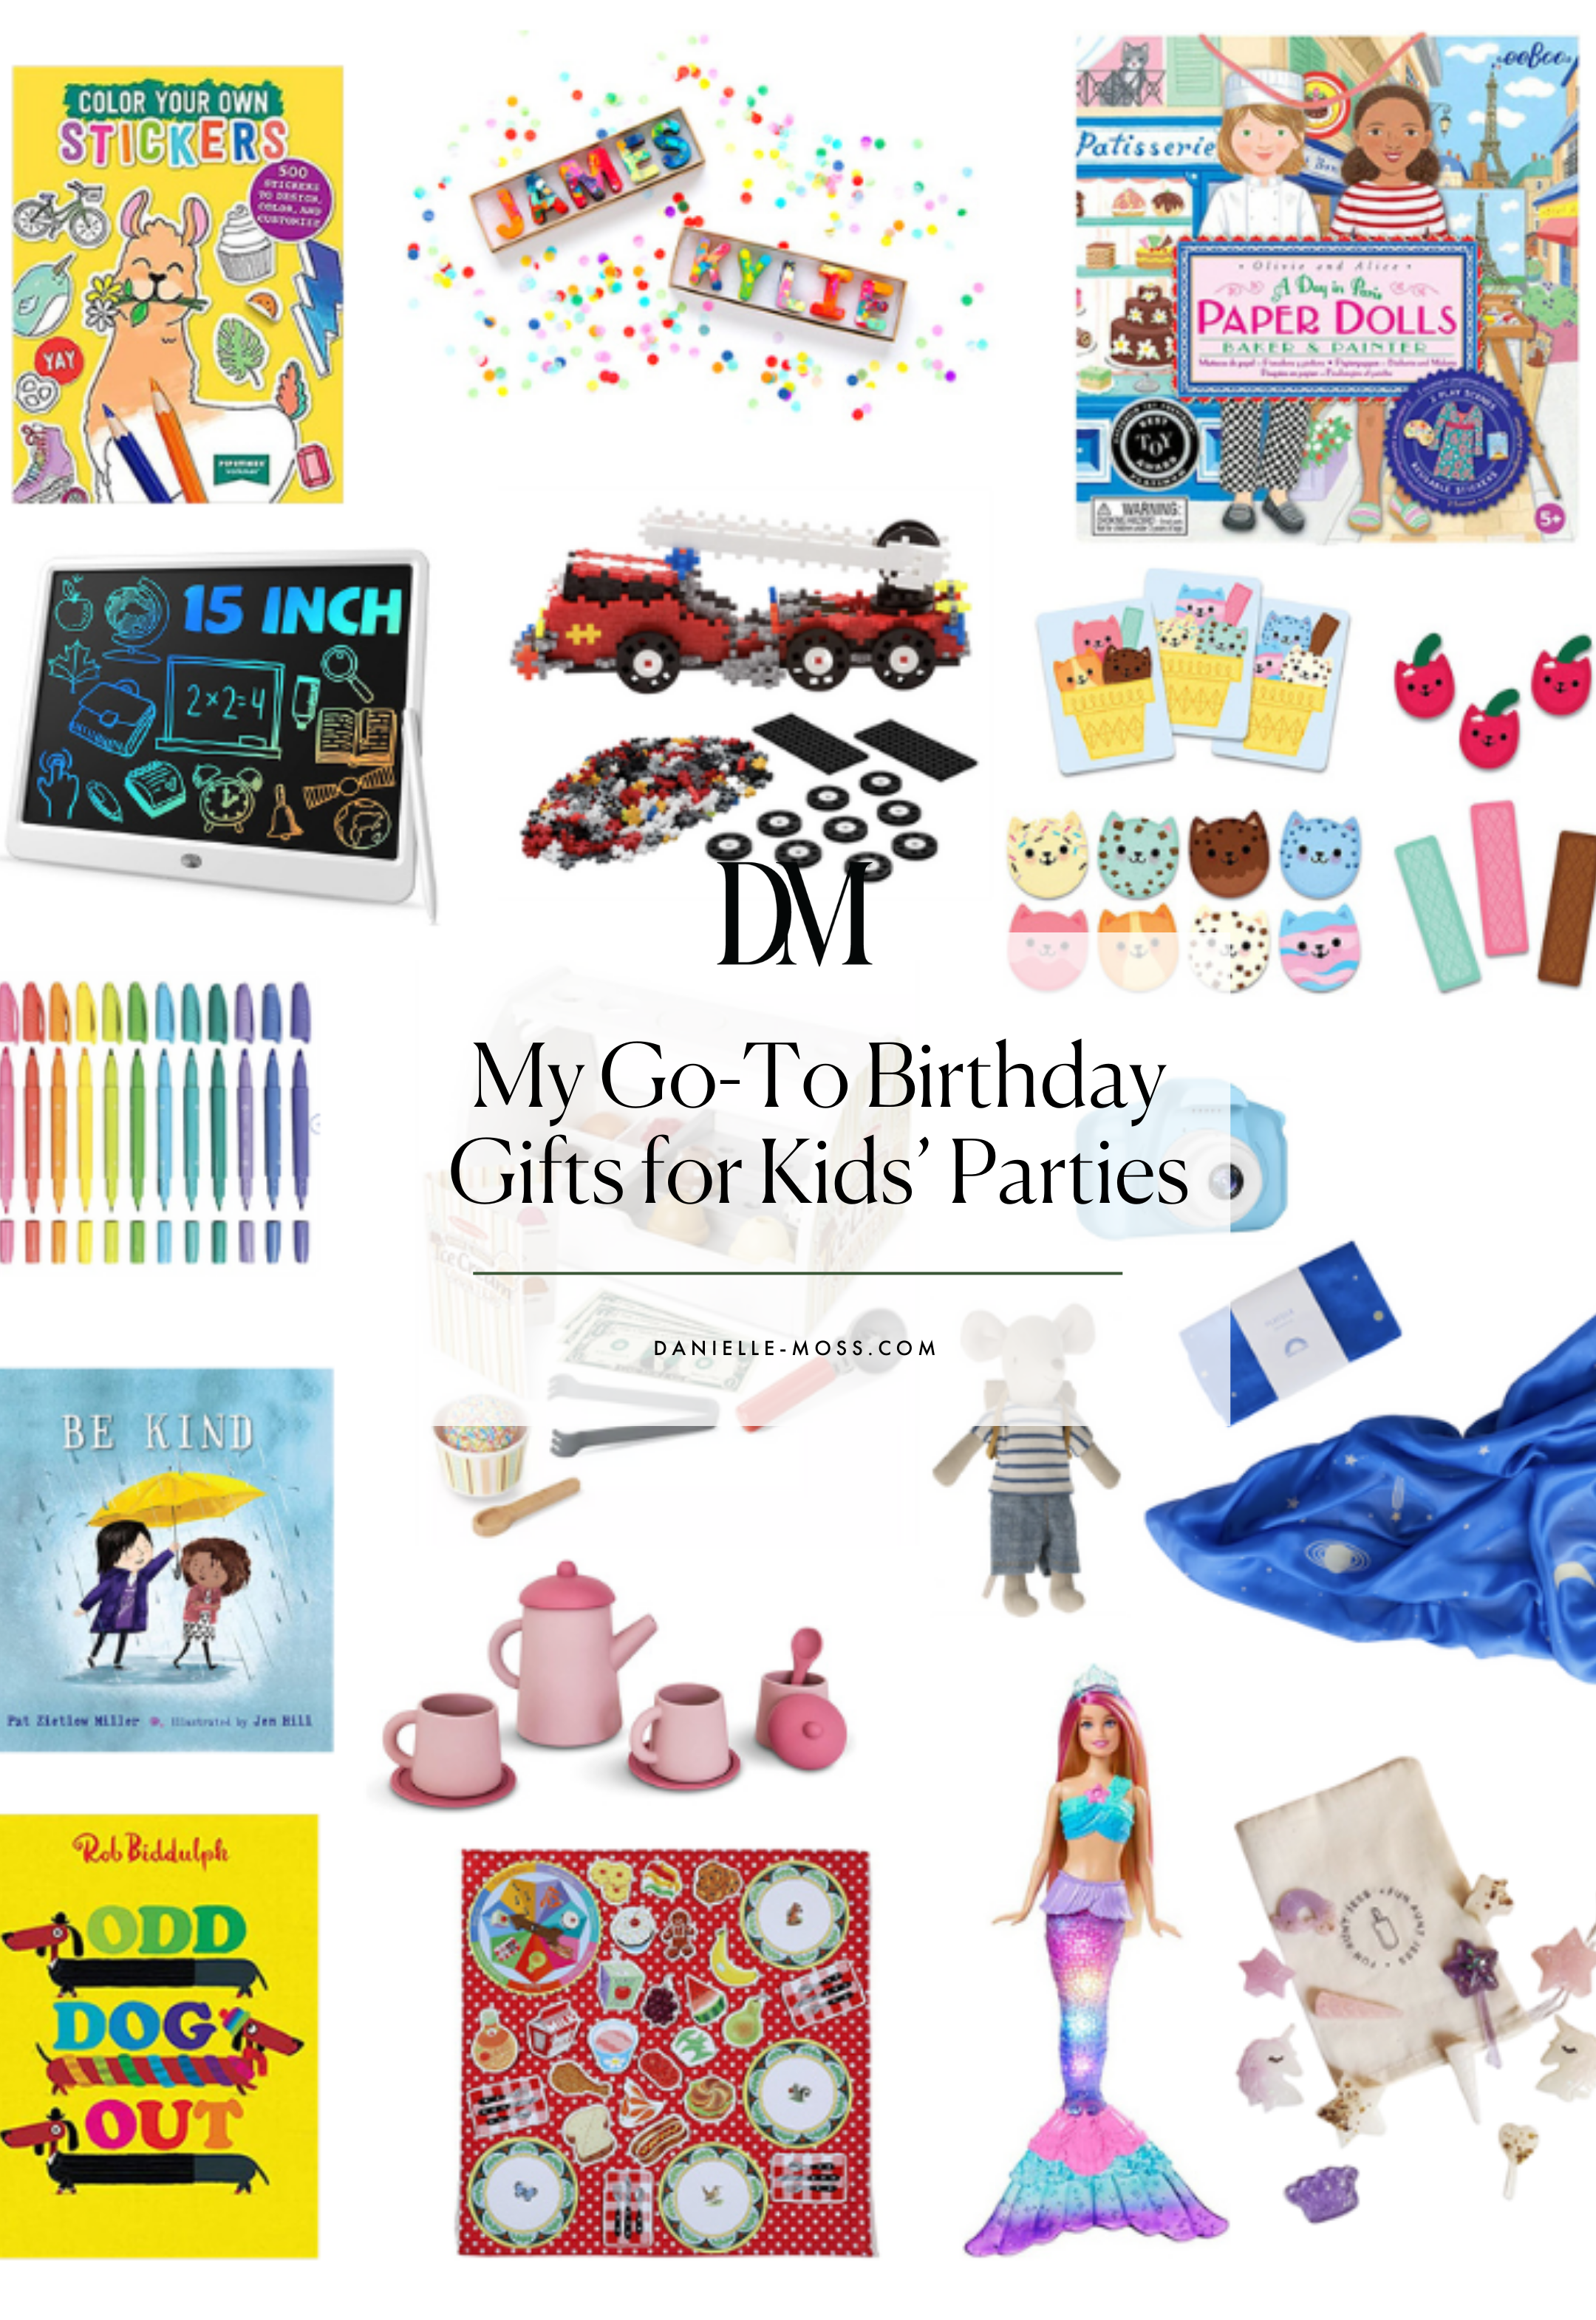 Happy Birthday Gifts for Women Girls, Best Friend Birthday Gifts for Men  Boys, | eBay